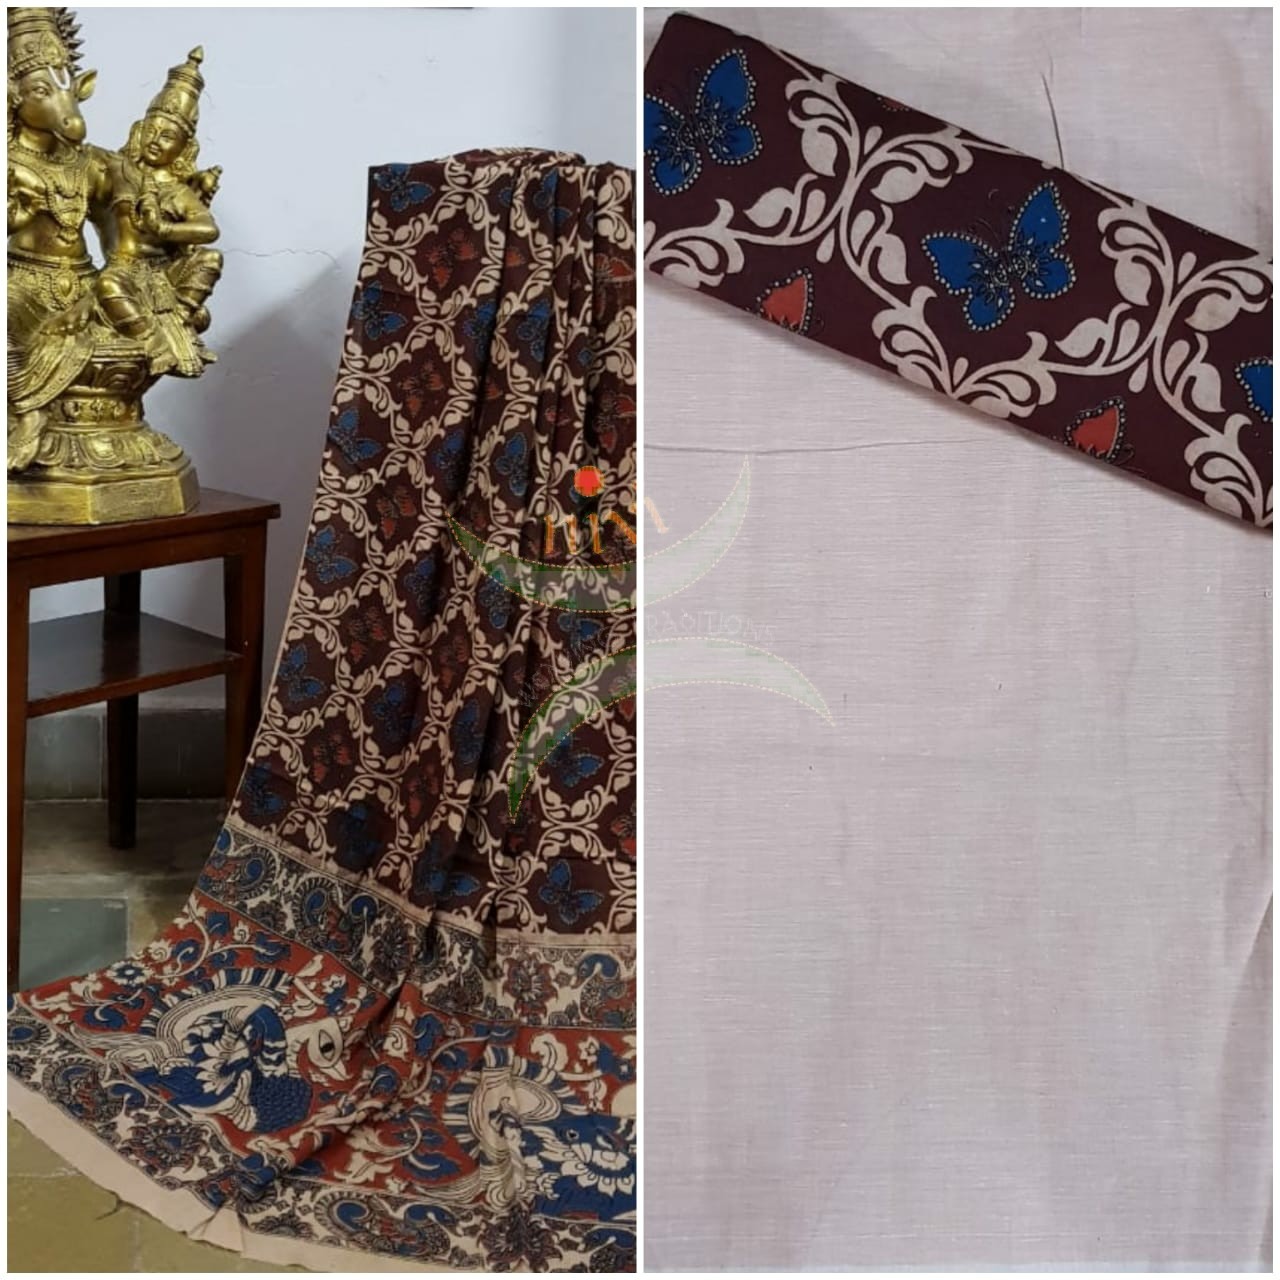 Handloom Mul cotton maroon butterfly motif print kalamkari dupatta and bottom with beige mangalgiri Cotton top.